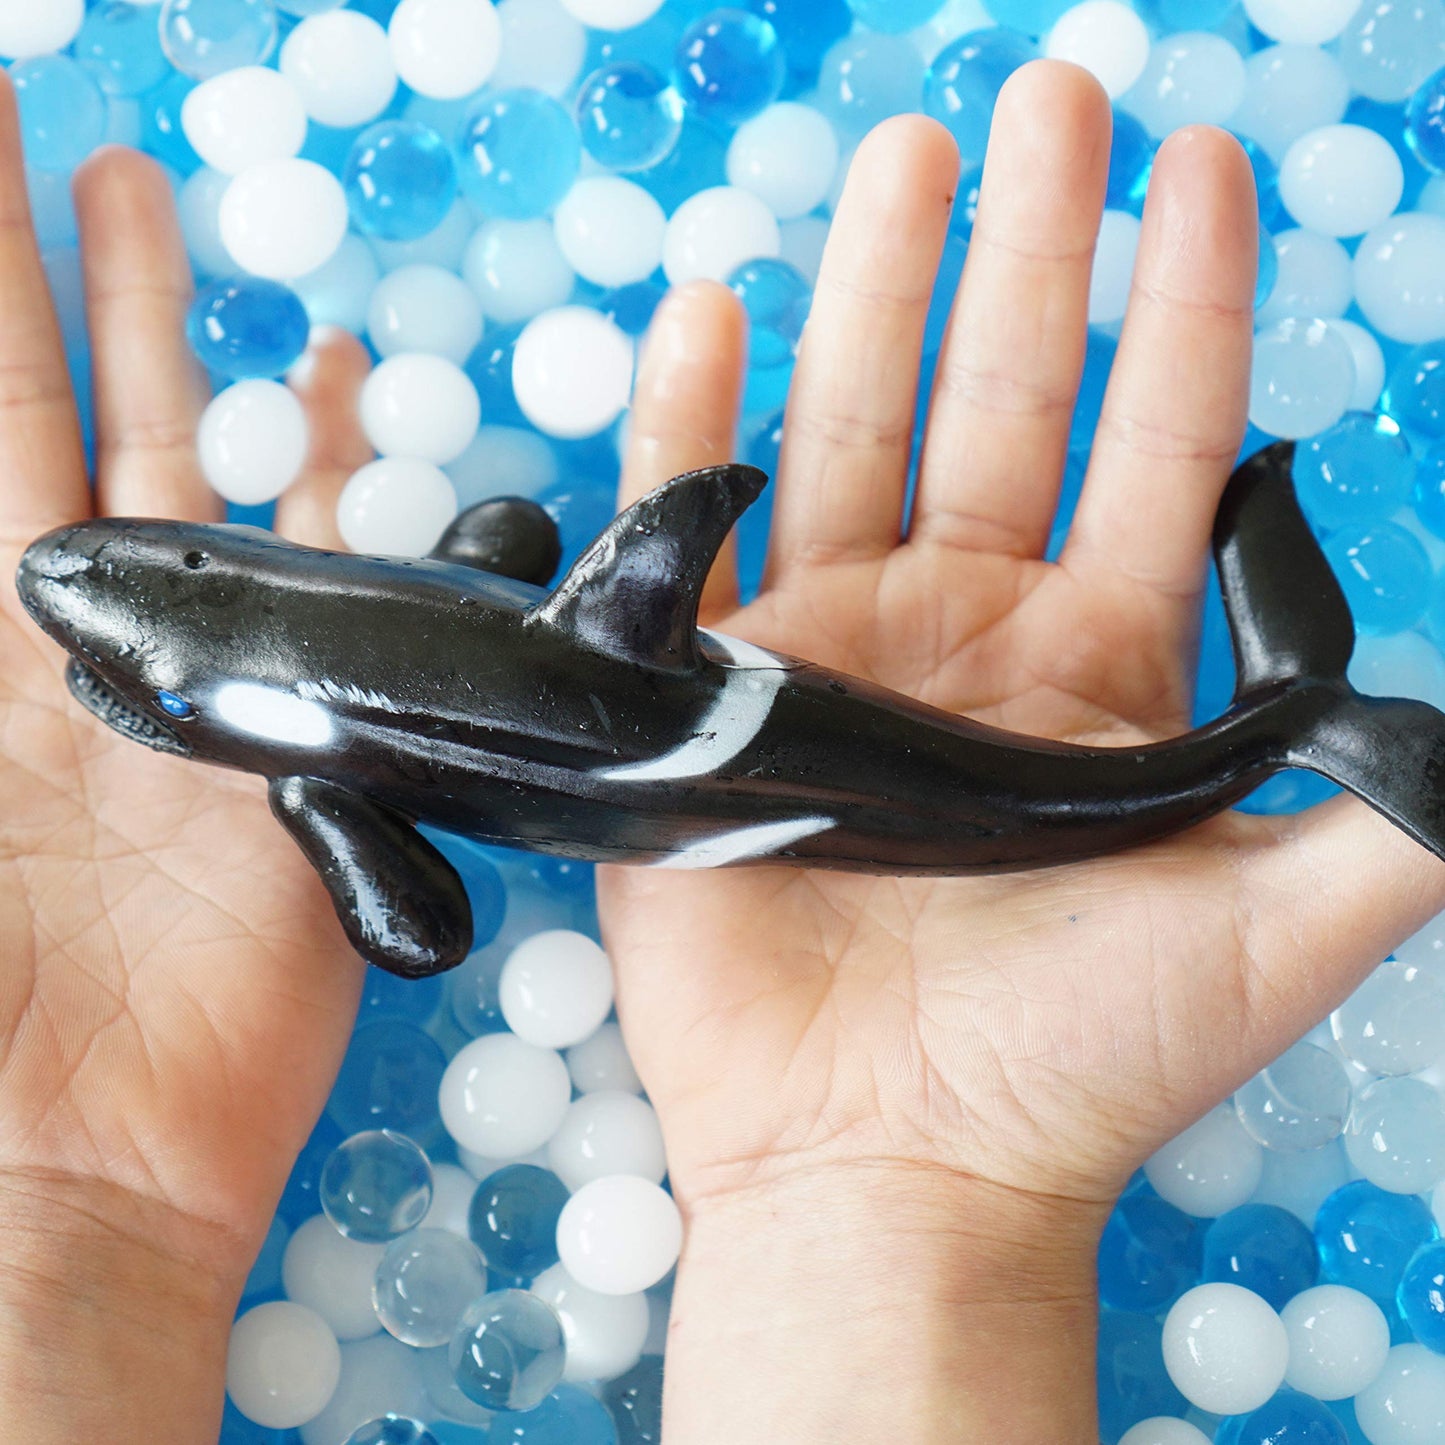 SENSORY4U Ocean Water Beads Swimming with Sharks Sensory Kit - Large Shark Toys Included - Dew Drops Offer Great Fine Motor Skills and Sensory Bin Kit for Kids